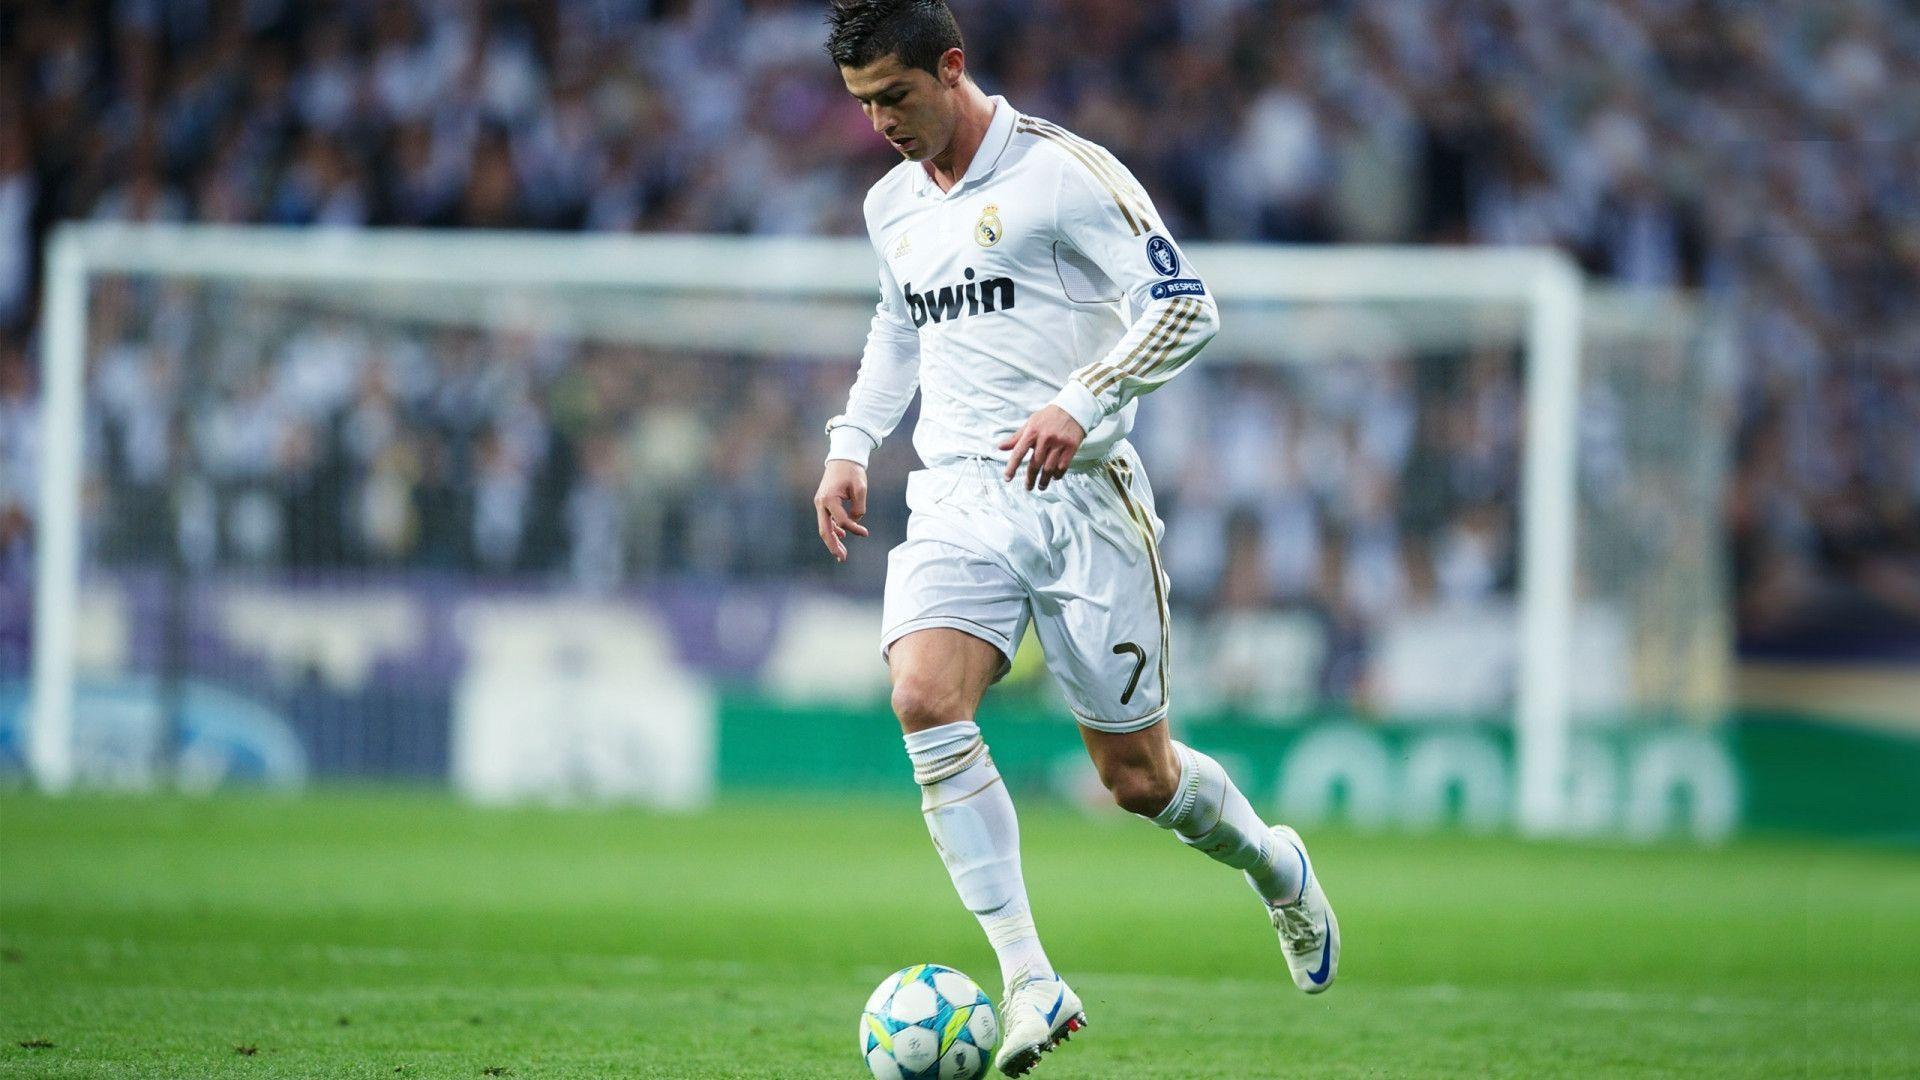 Cristiano Ronaldo HD Wallpaper Free Download. HD Free Wallpaper